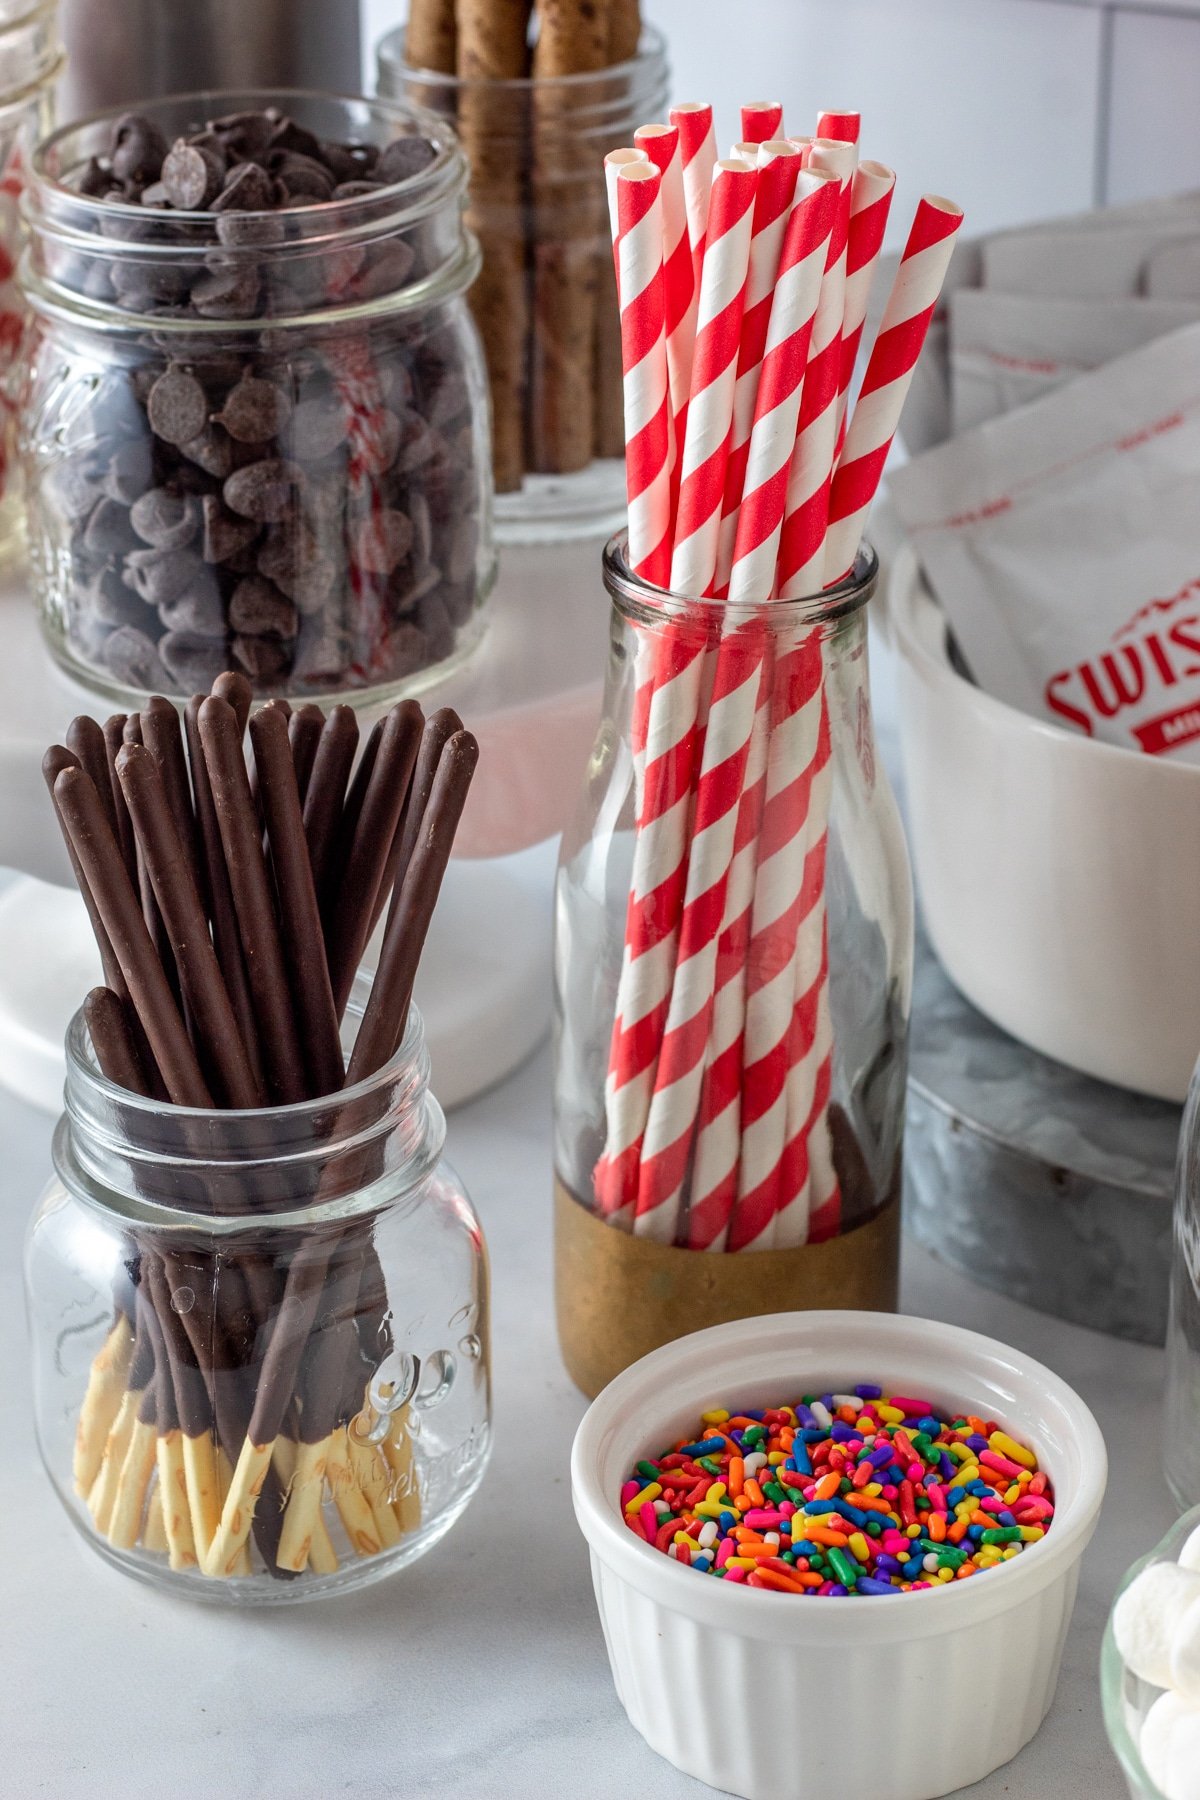 Pocky sticks, red striped straws, sprinkles, and chocolate chips in glass jars